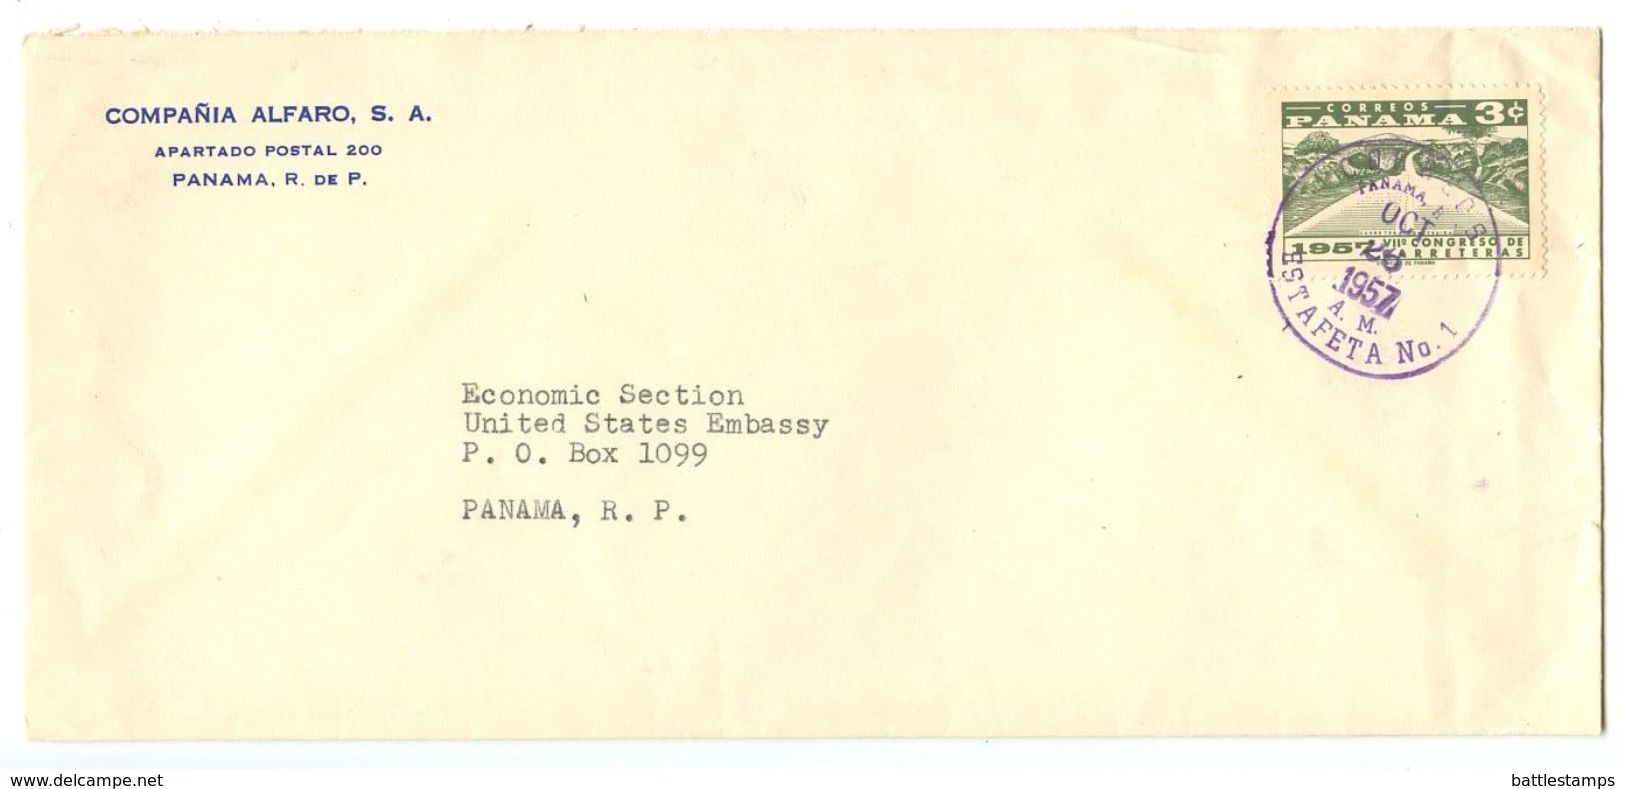 Panama 1957 Cover To Panama - United States Embassy, Scott 408 408 Pan-American Highway - Panama